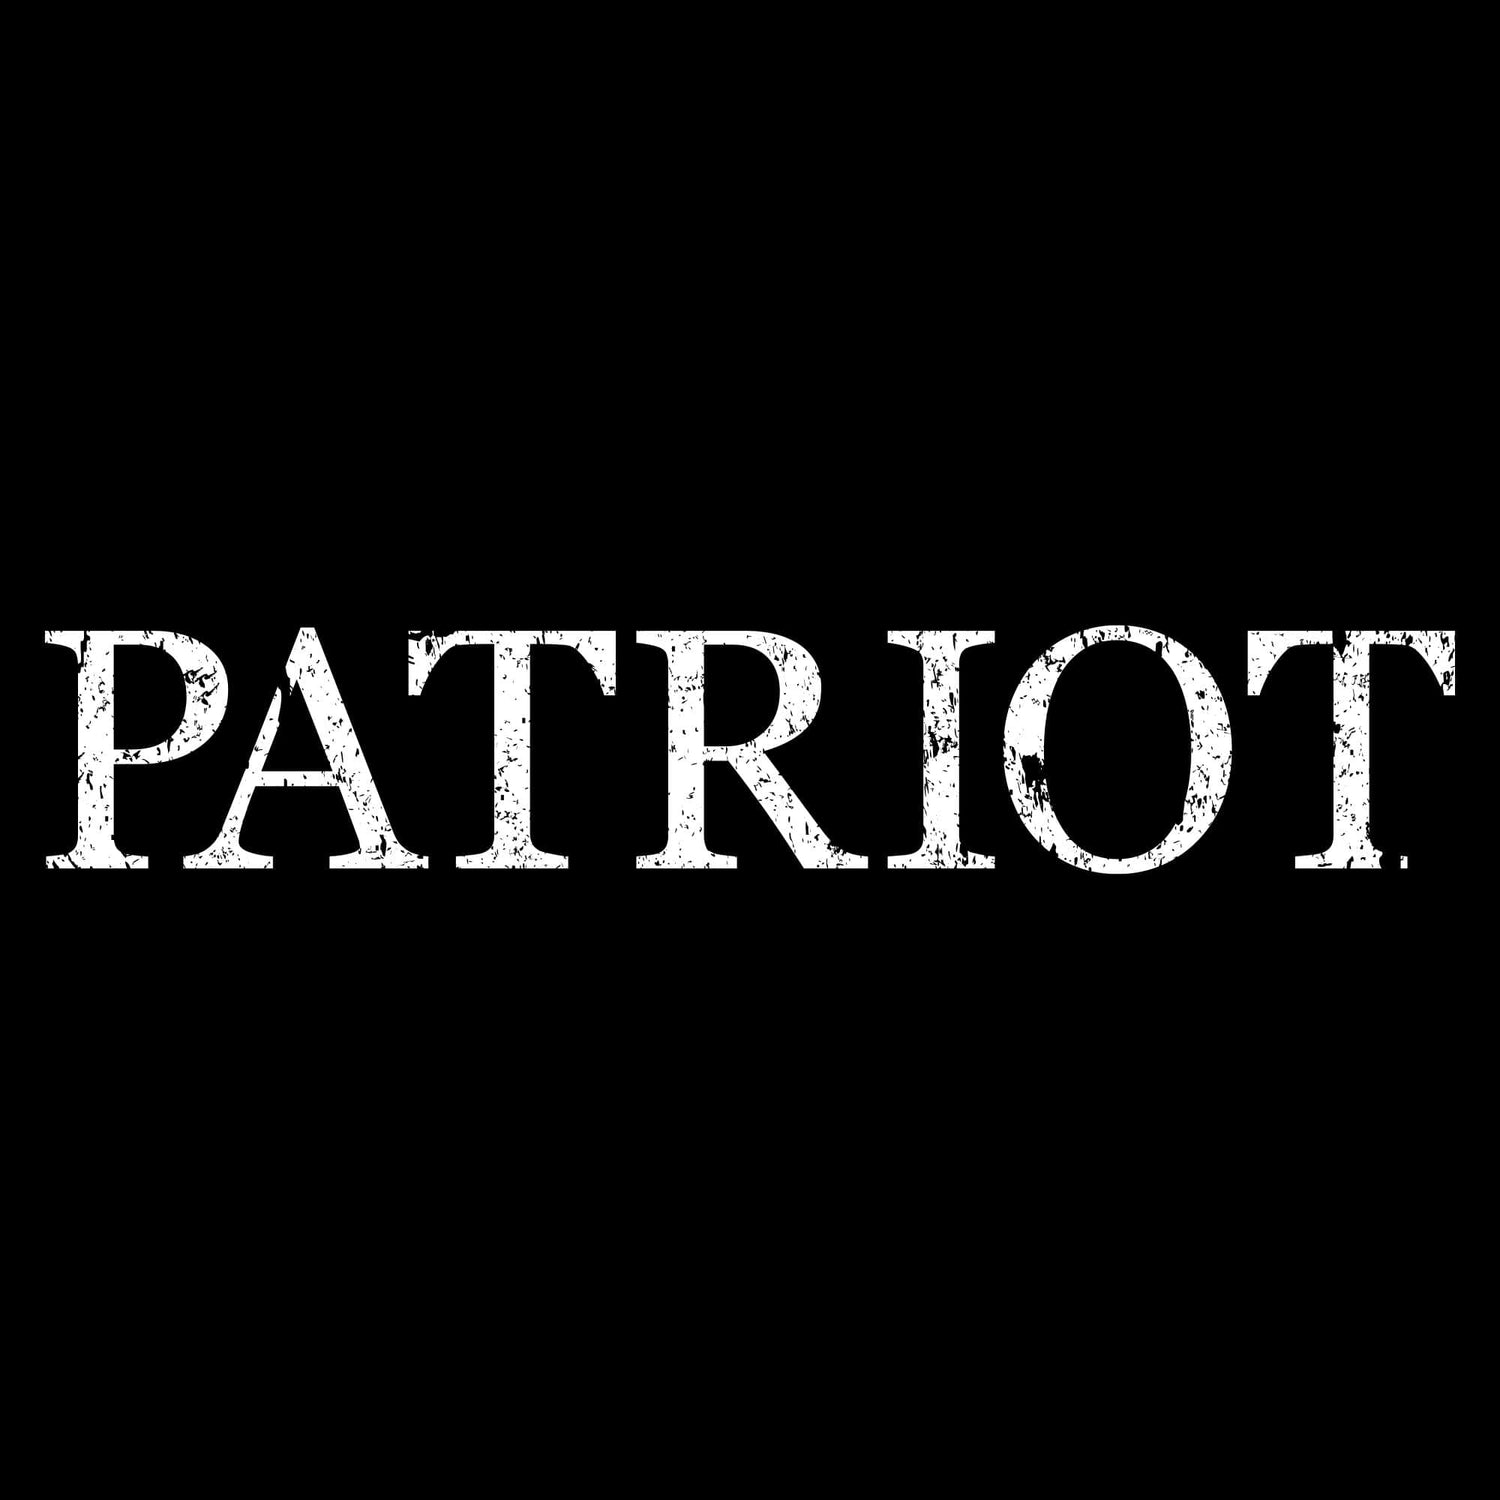 Men's Patriot Defined Graphic | Grunt Style 